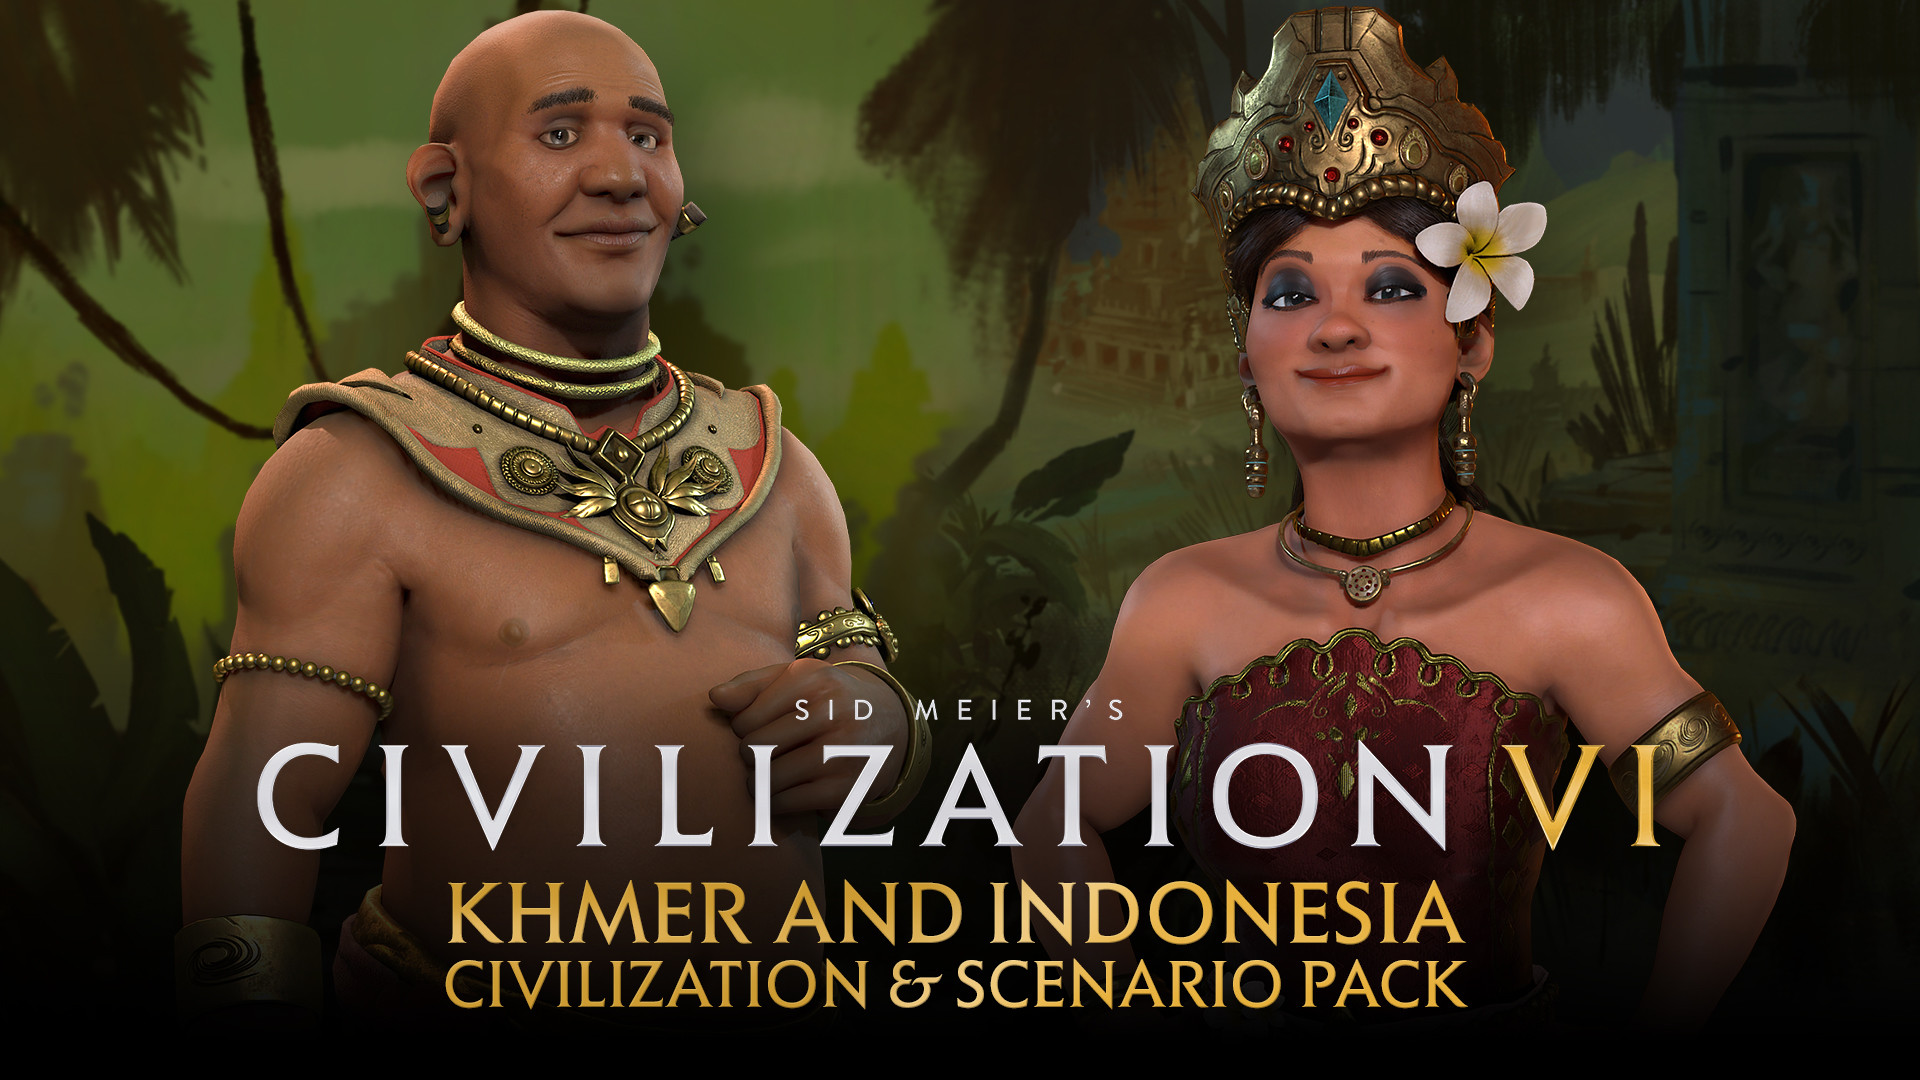 Sid Meier’s Civilization VI - Khmer and Indonesia Civilization & Scenario Pack